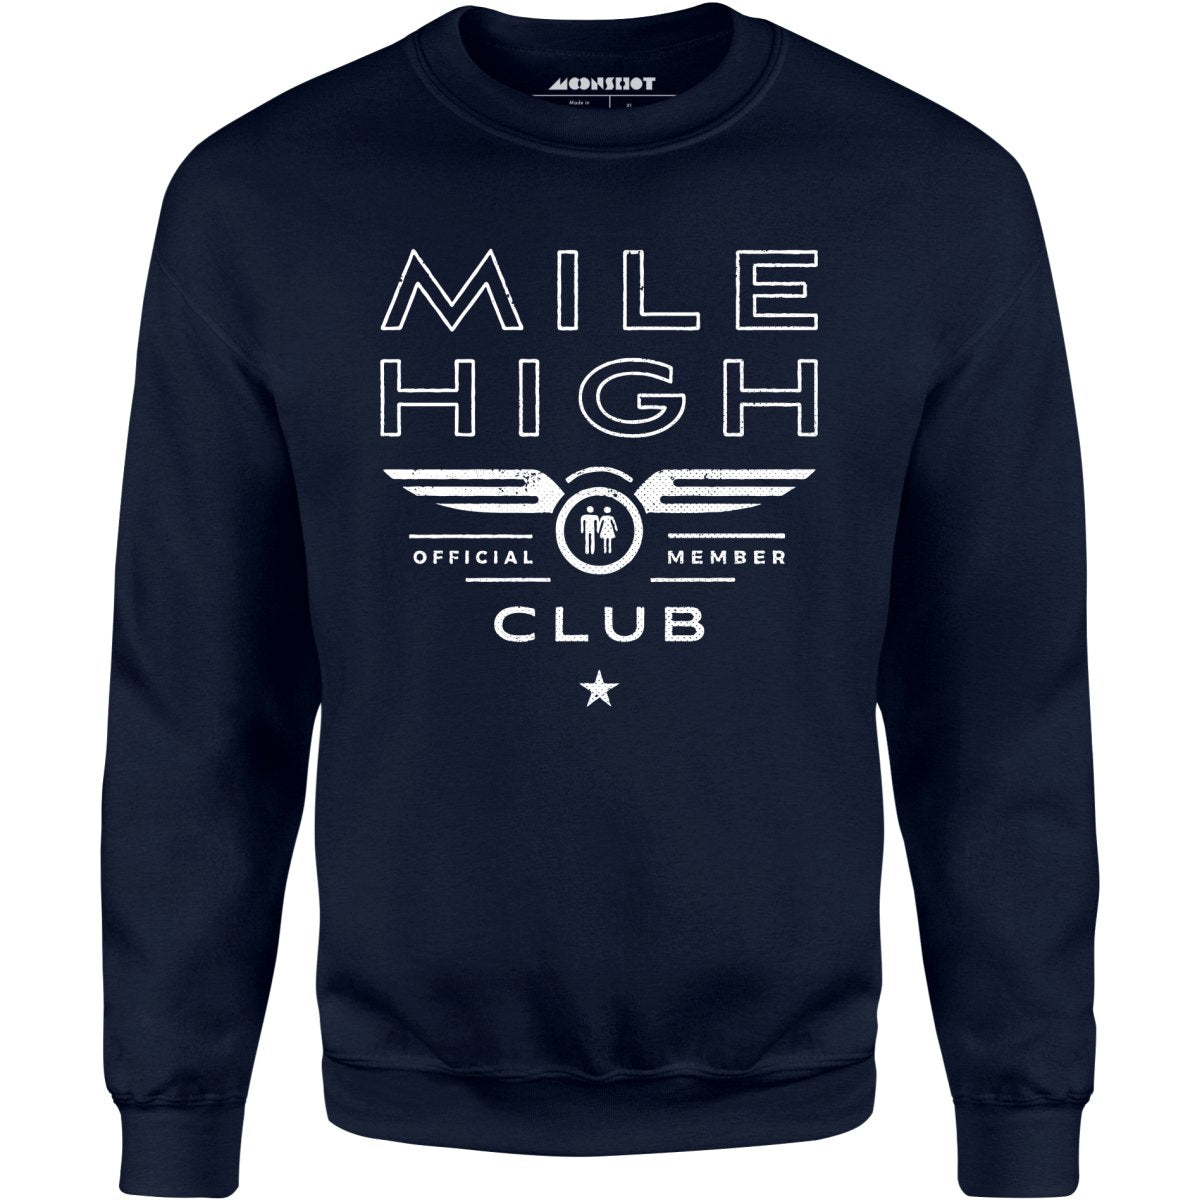 Mile High Club Official Member - Unisex Sweatshirt